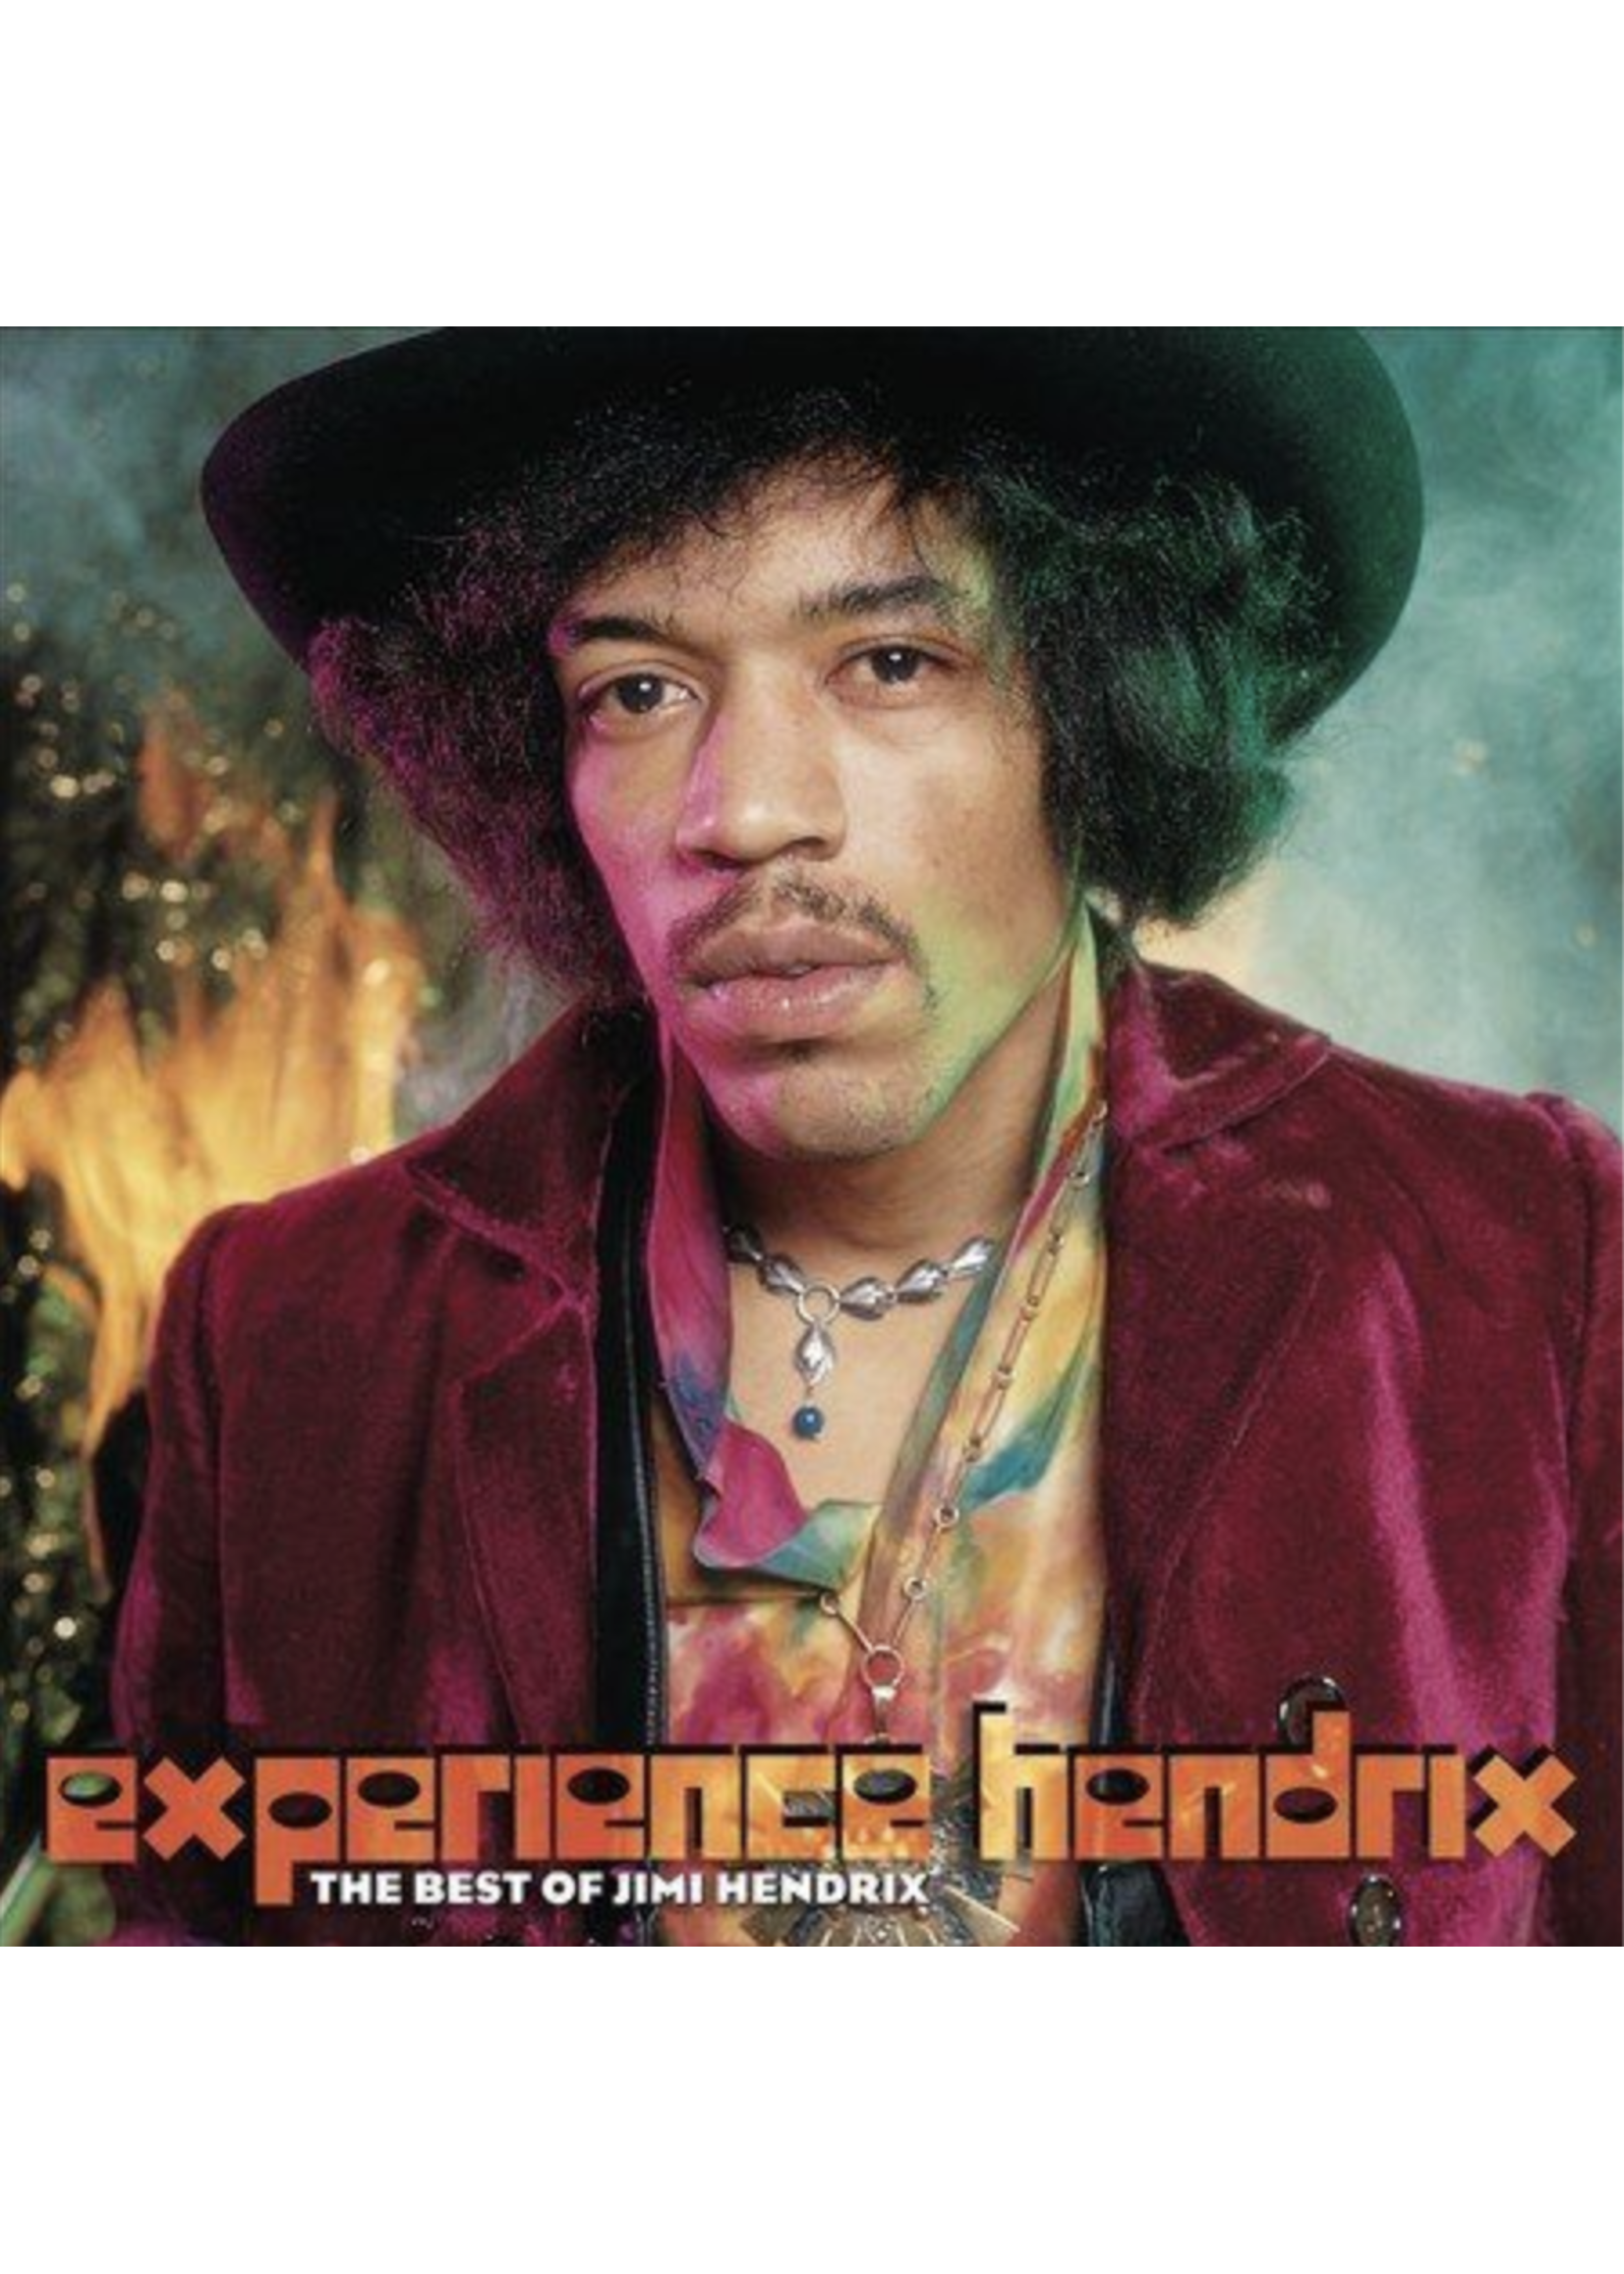 Jimi Hendrix Experience Hendrix: The Best of Jimi Hendrix